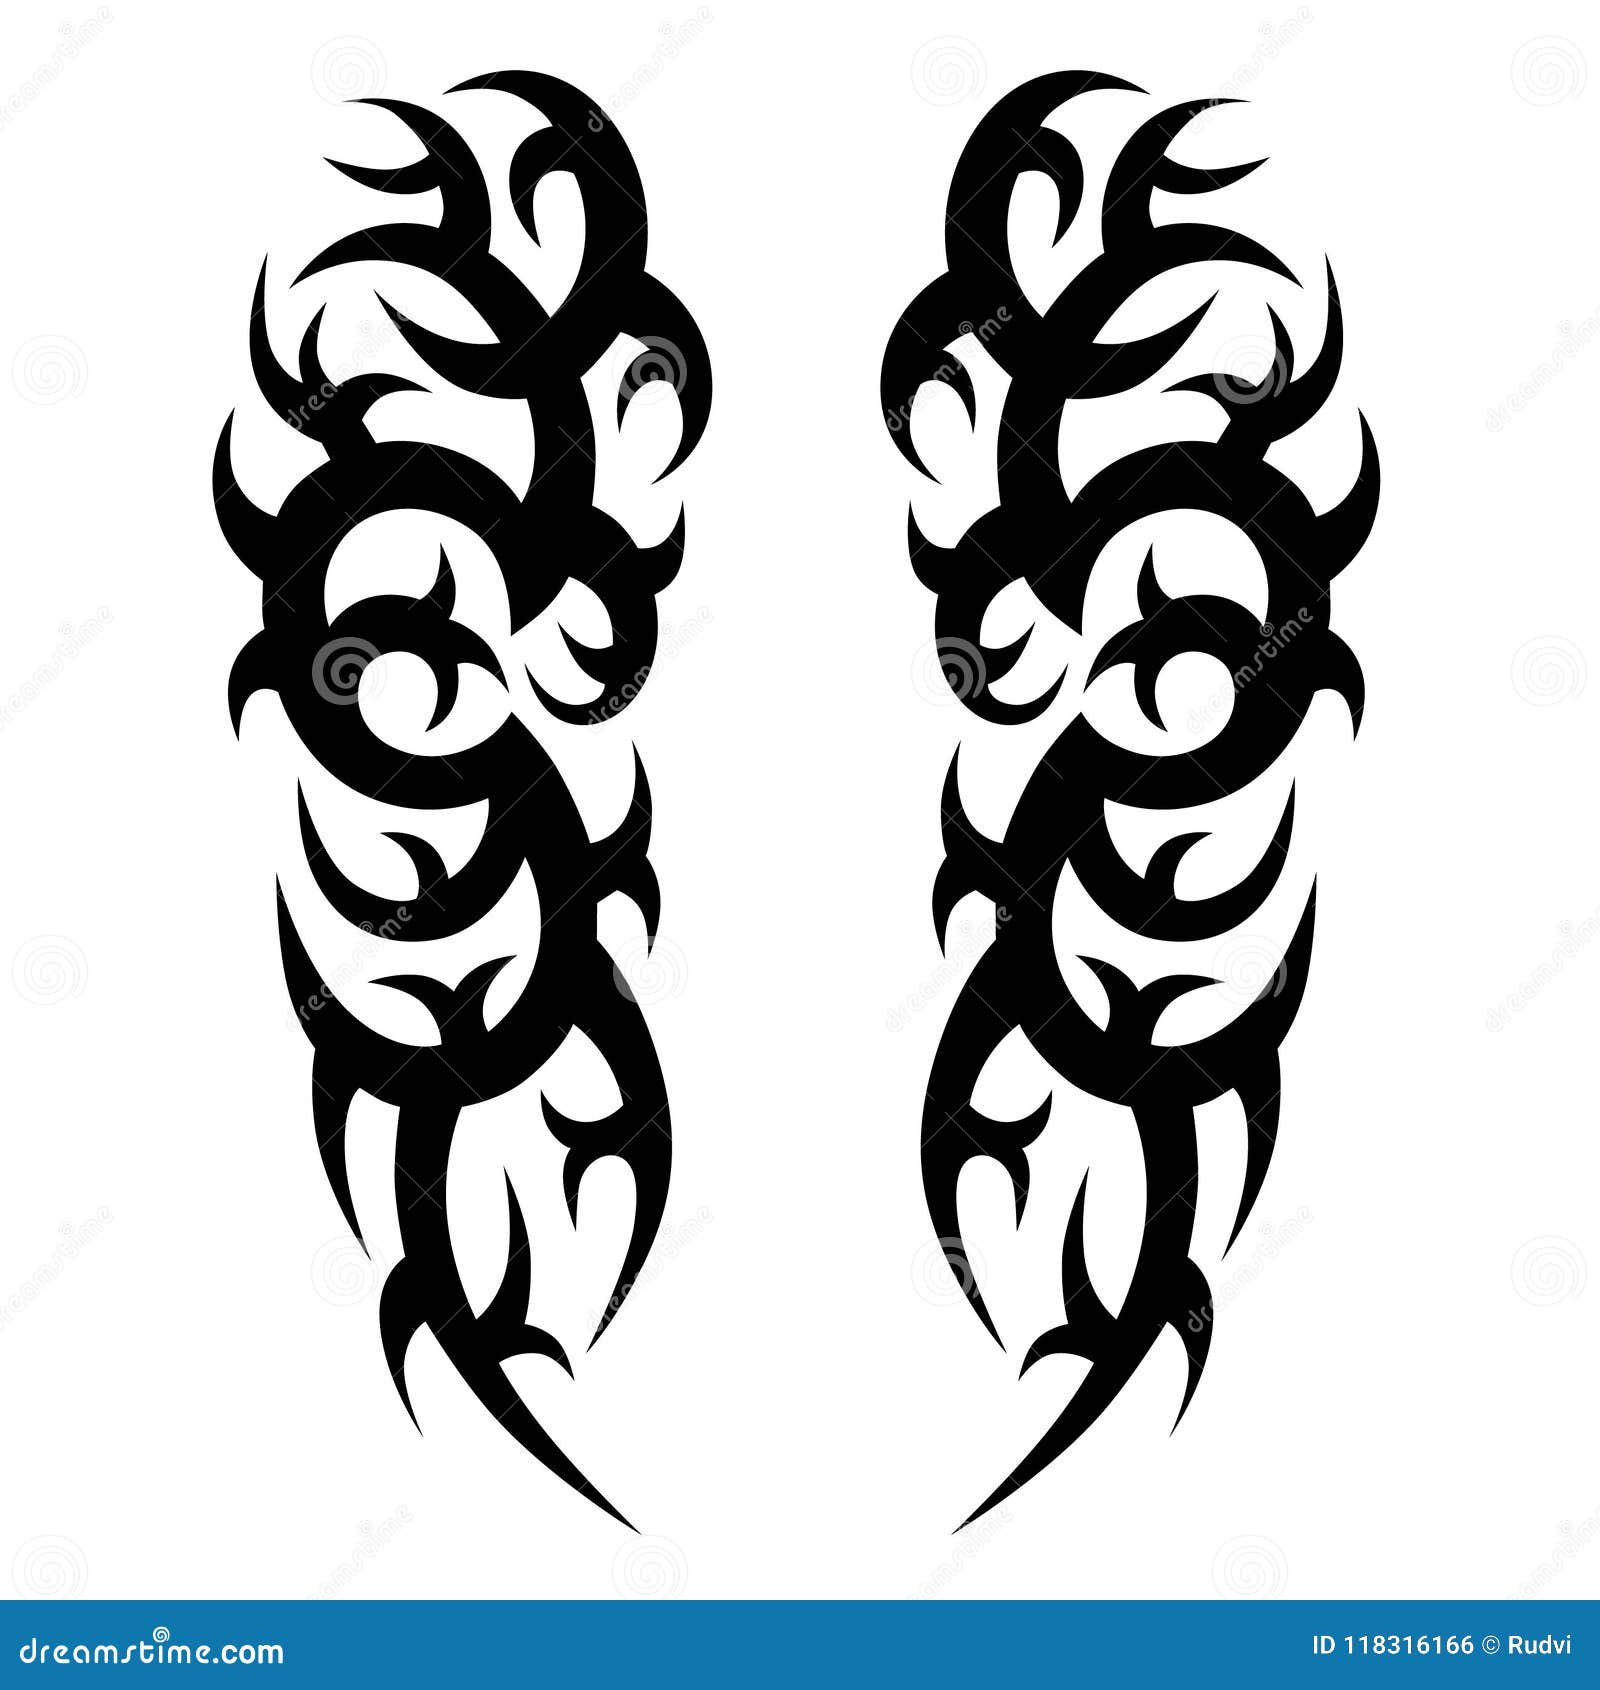 Eyes tribal tattoo design Royalty Free Vector Image